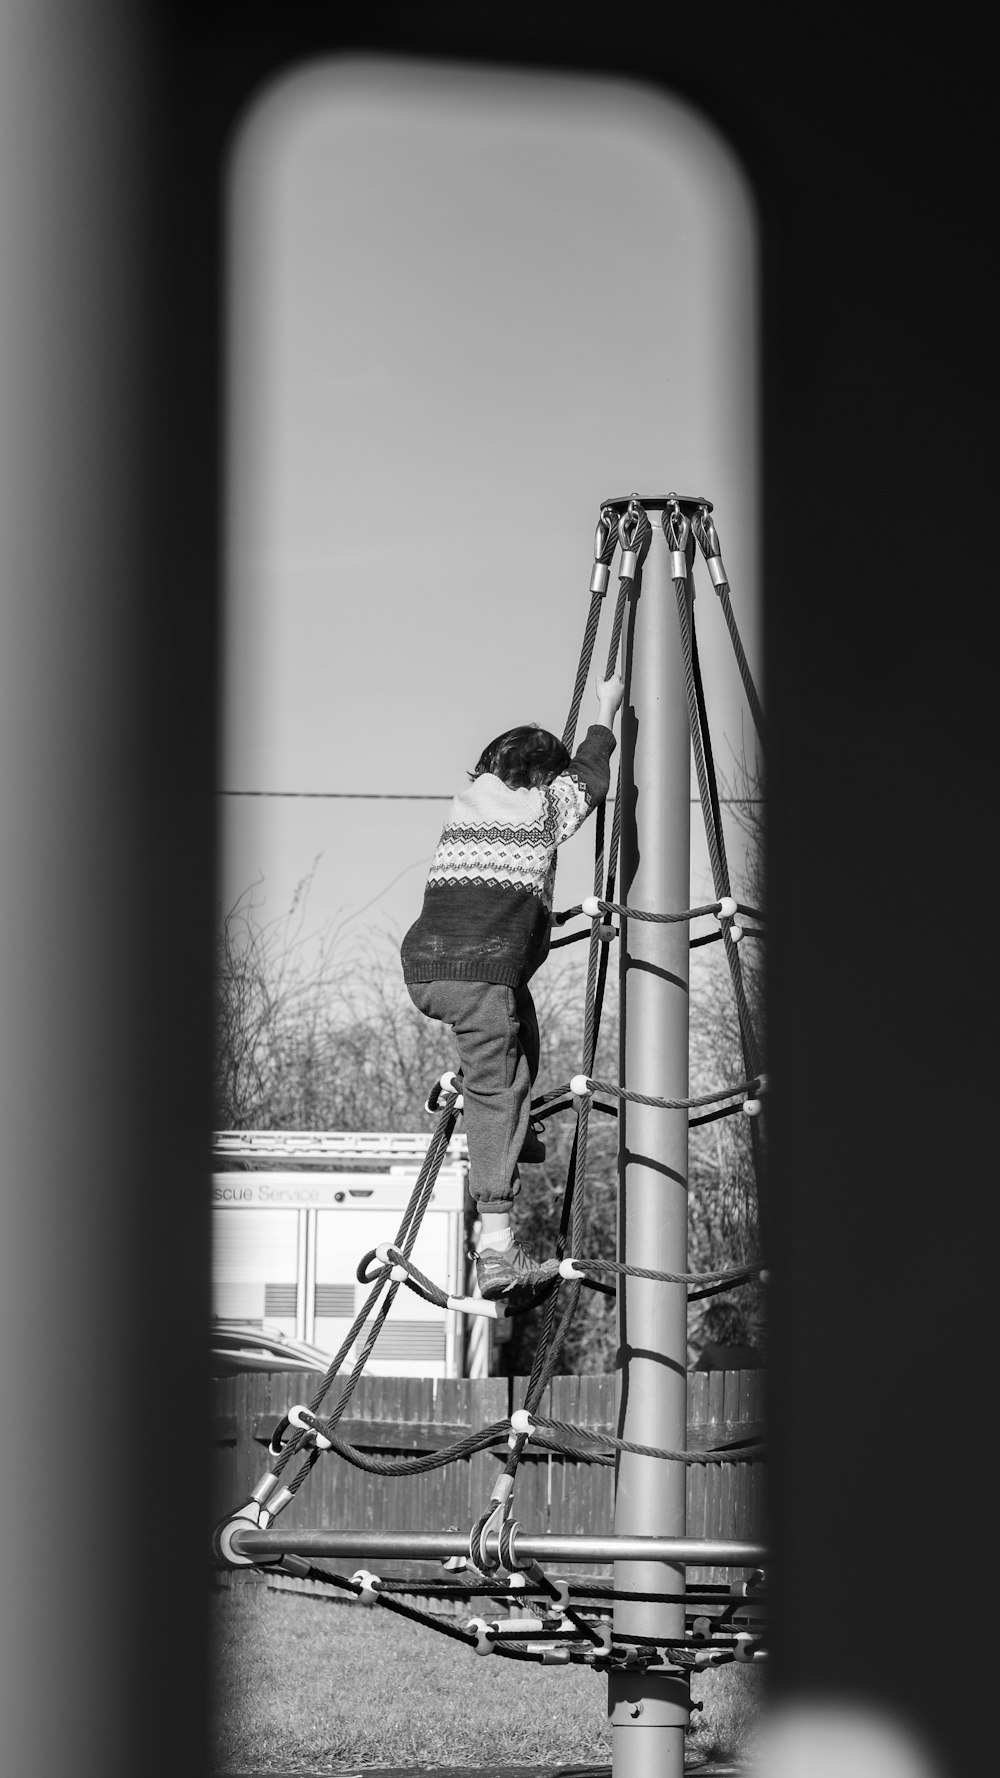 a person climbing up a metal pole